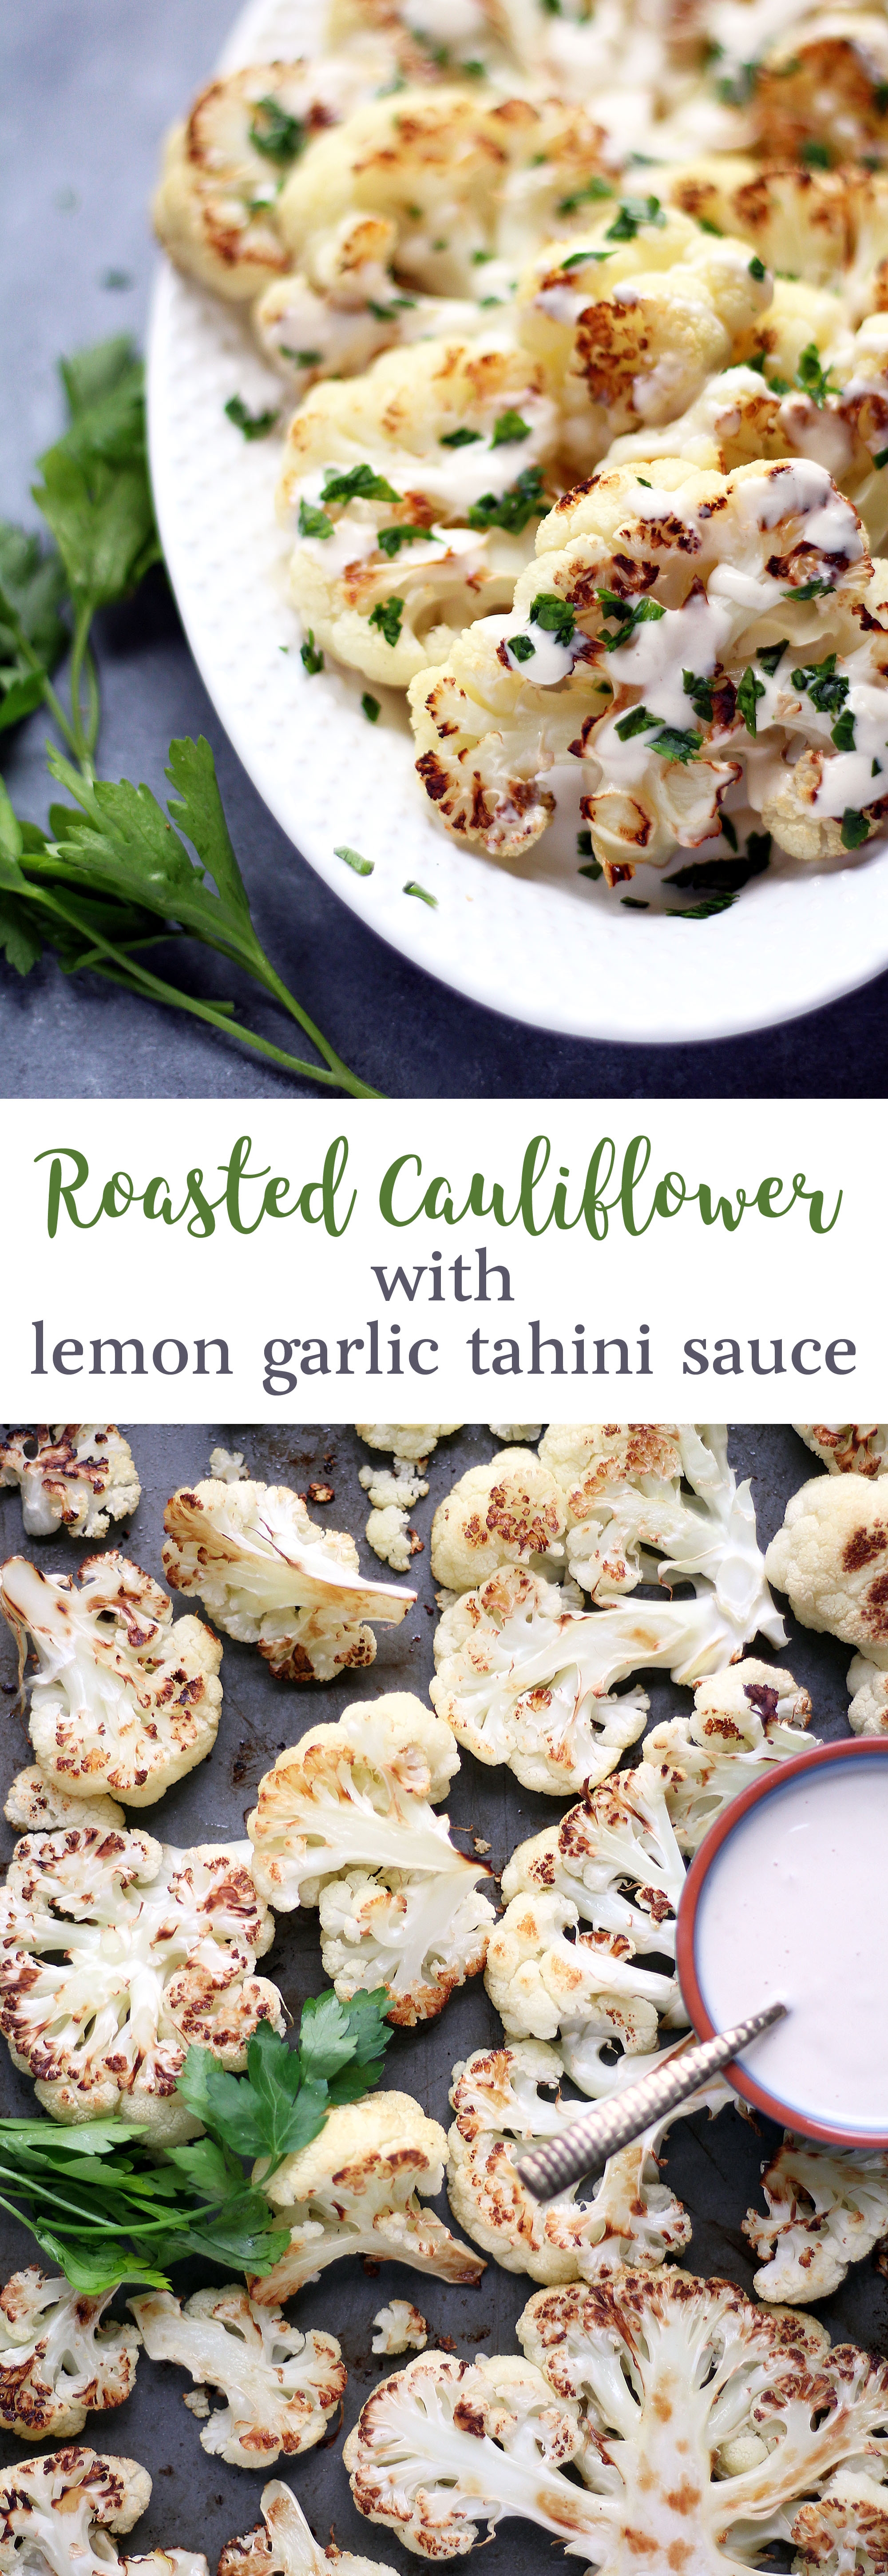 Roasted Caulliflower with a Lemon Garlic Tahini Sauce